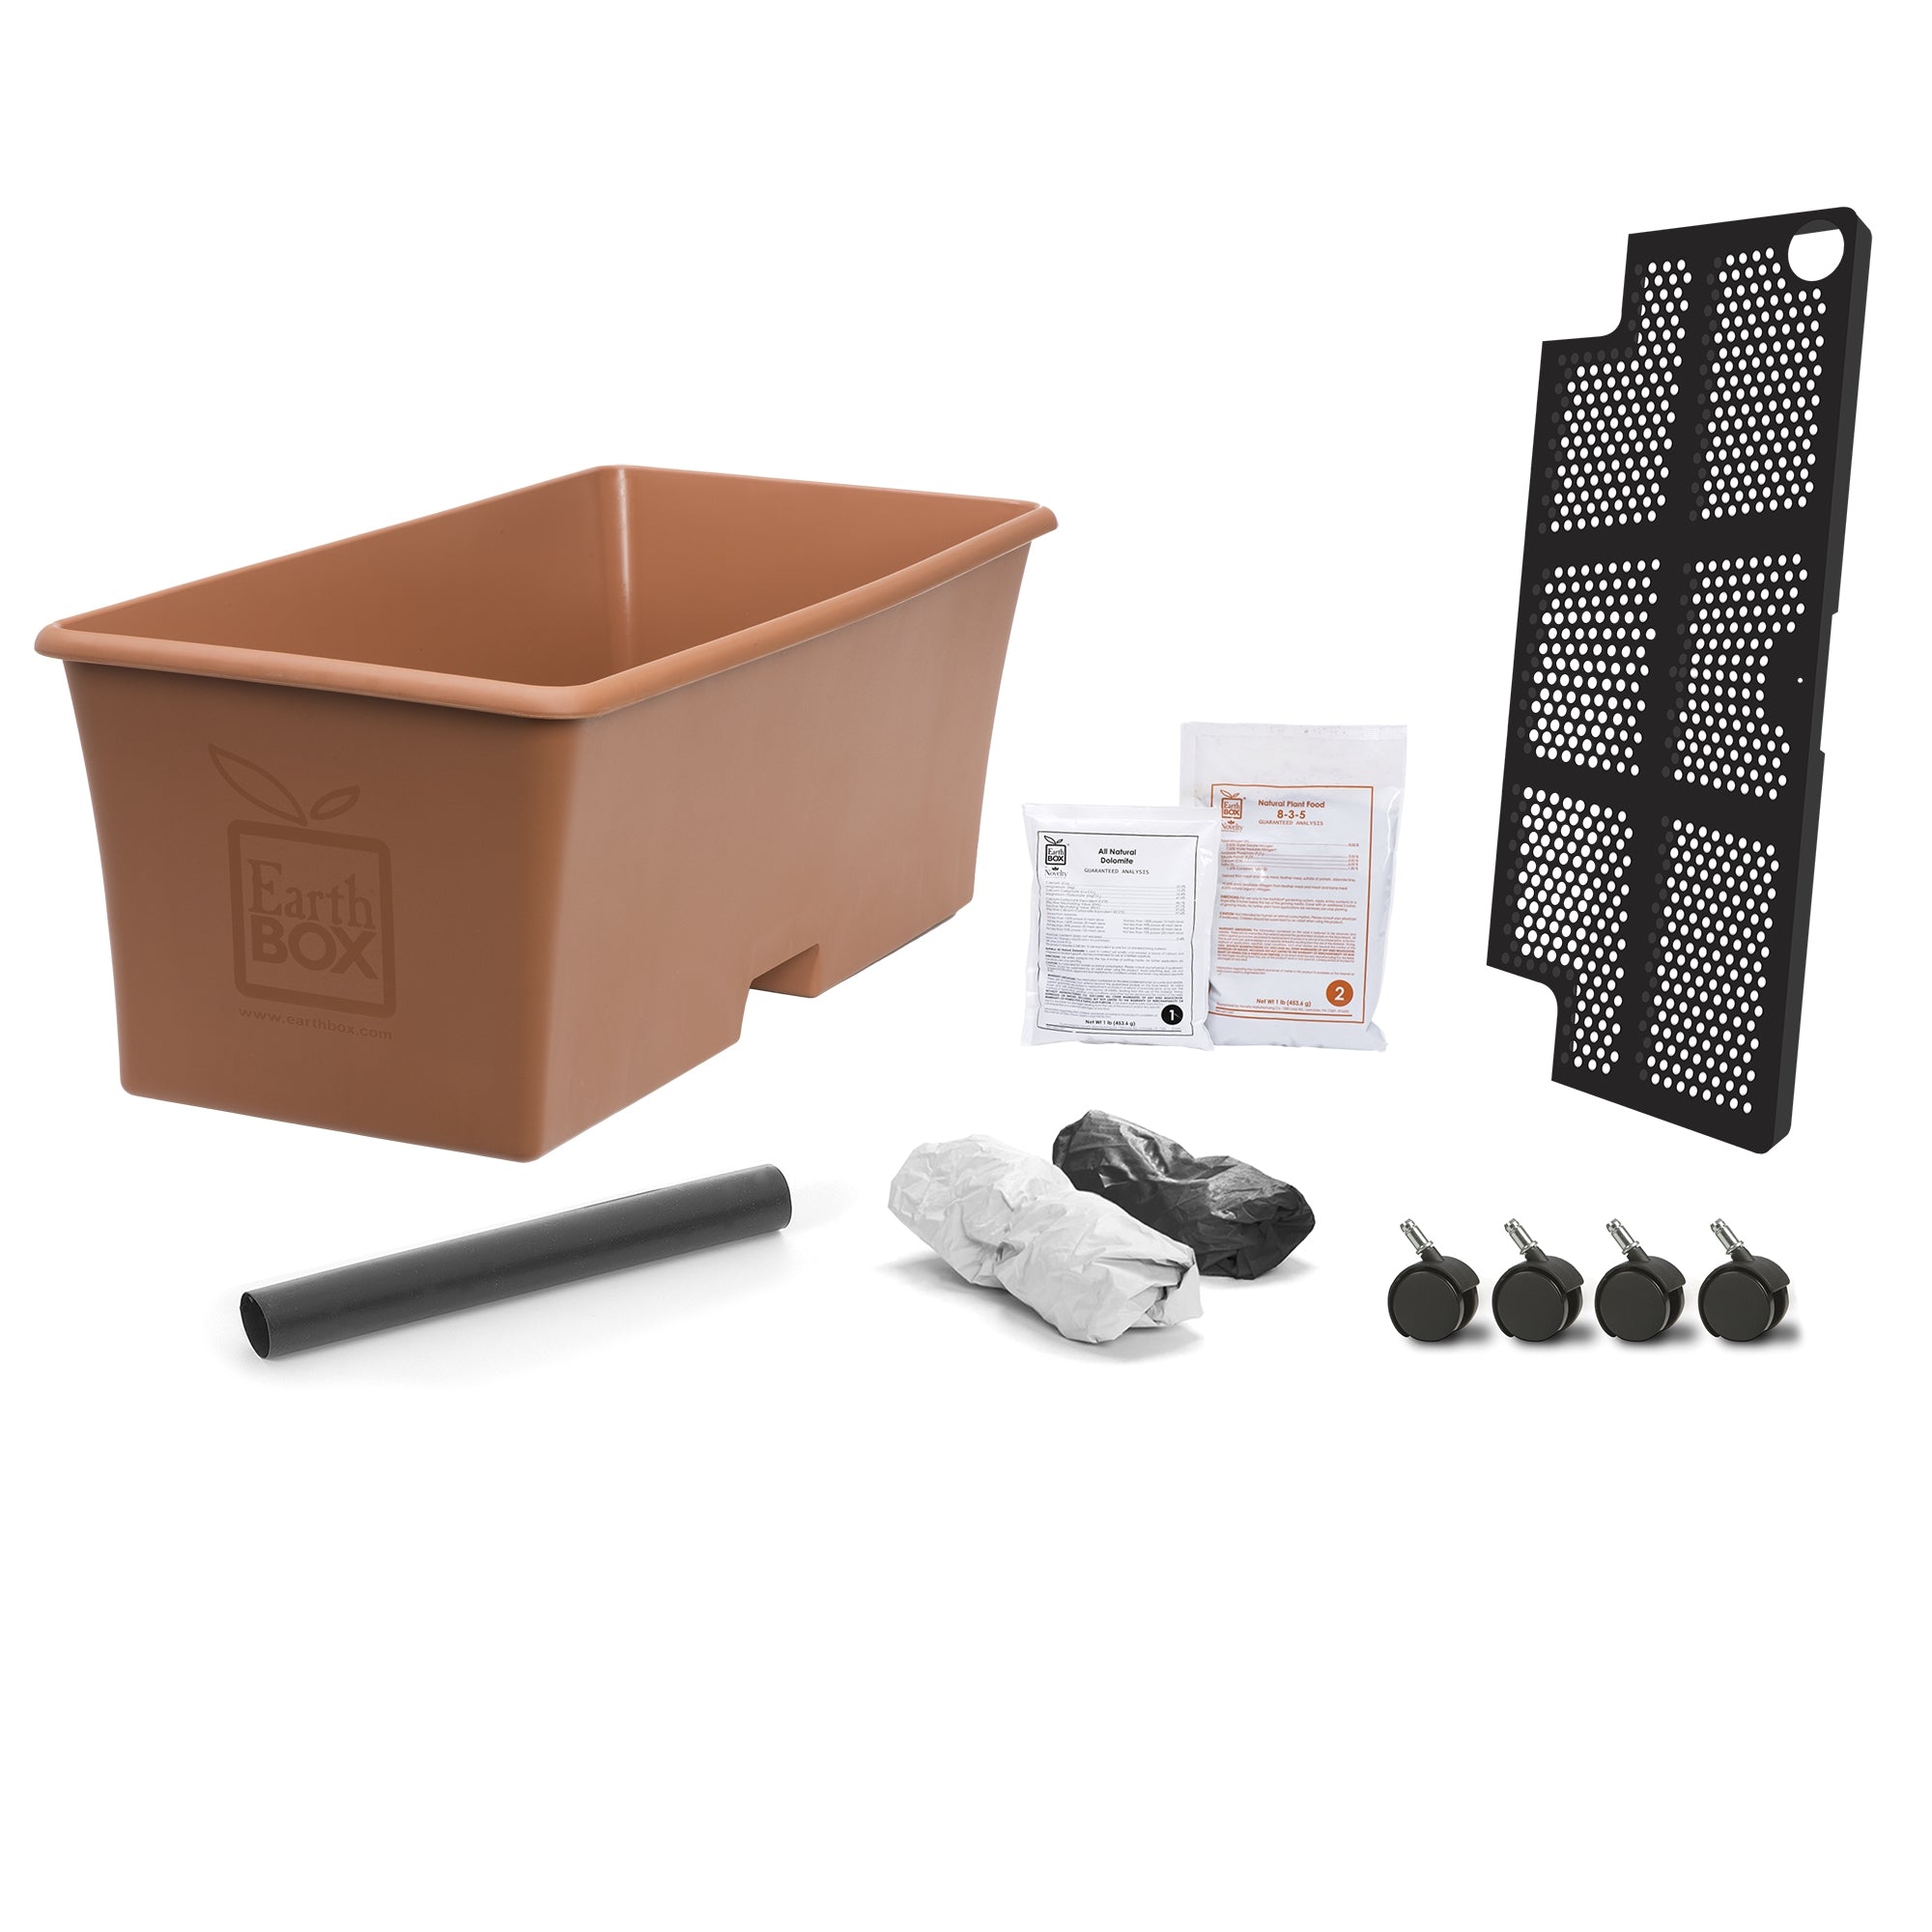 Novelty EarthBox Self-Watering Growing System Garden Kit